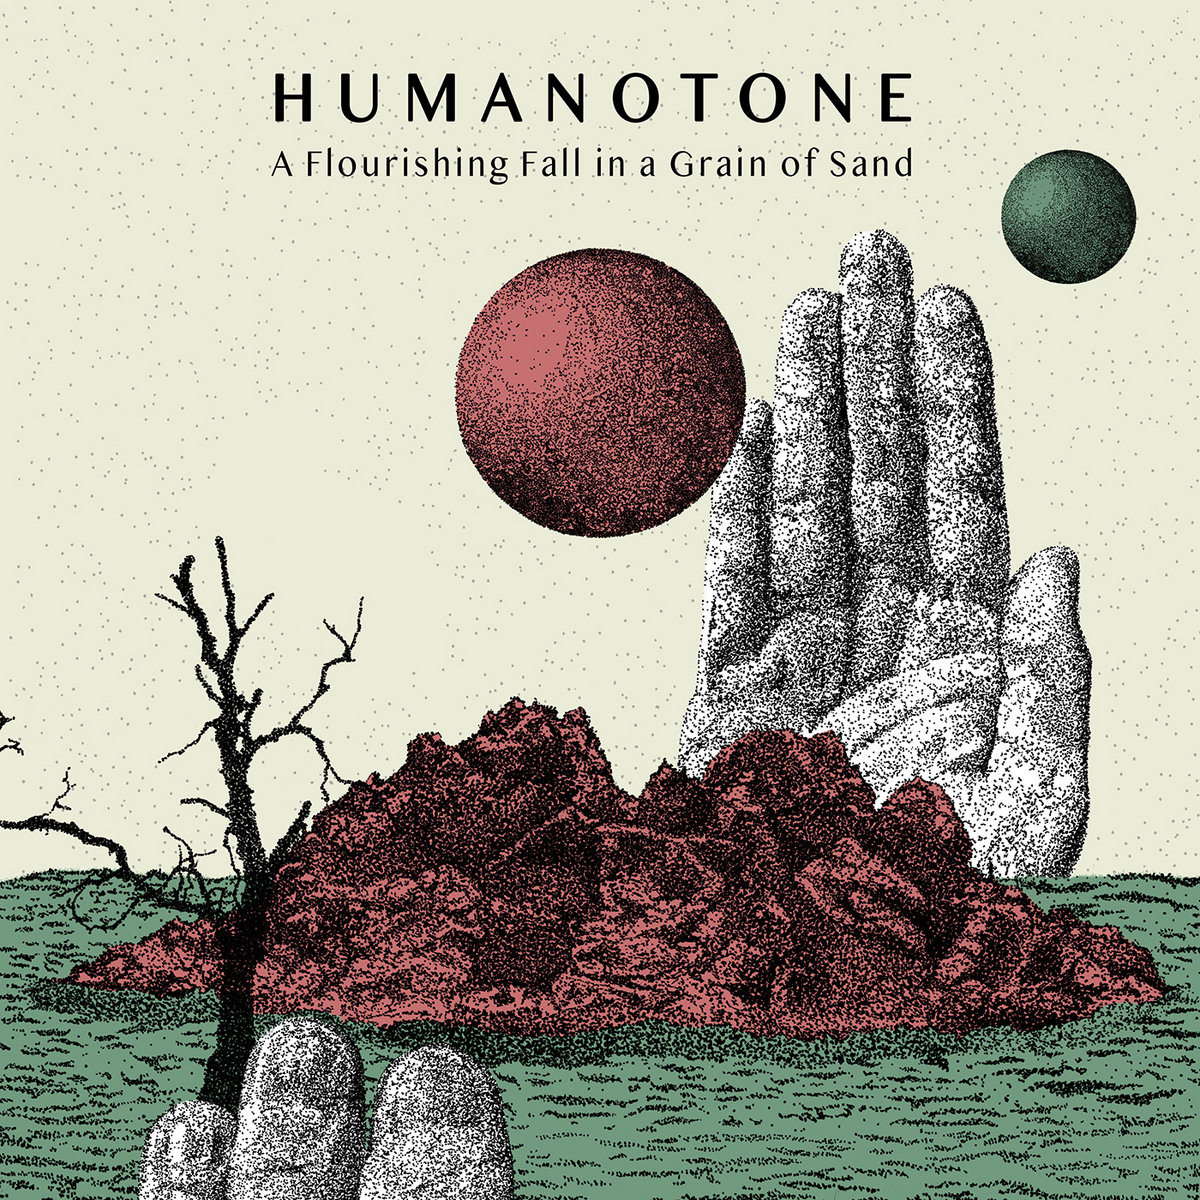 Humanotone A Flourishing Fall in a Grain of Sand progjazz chile 2022 album